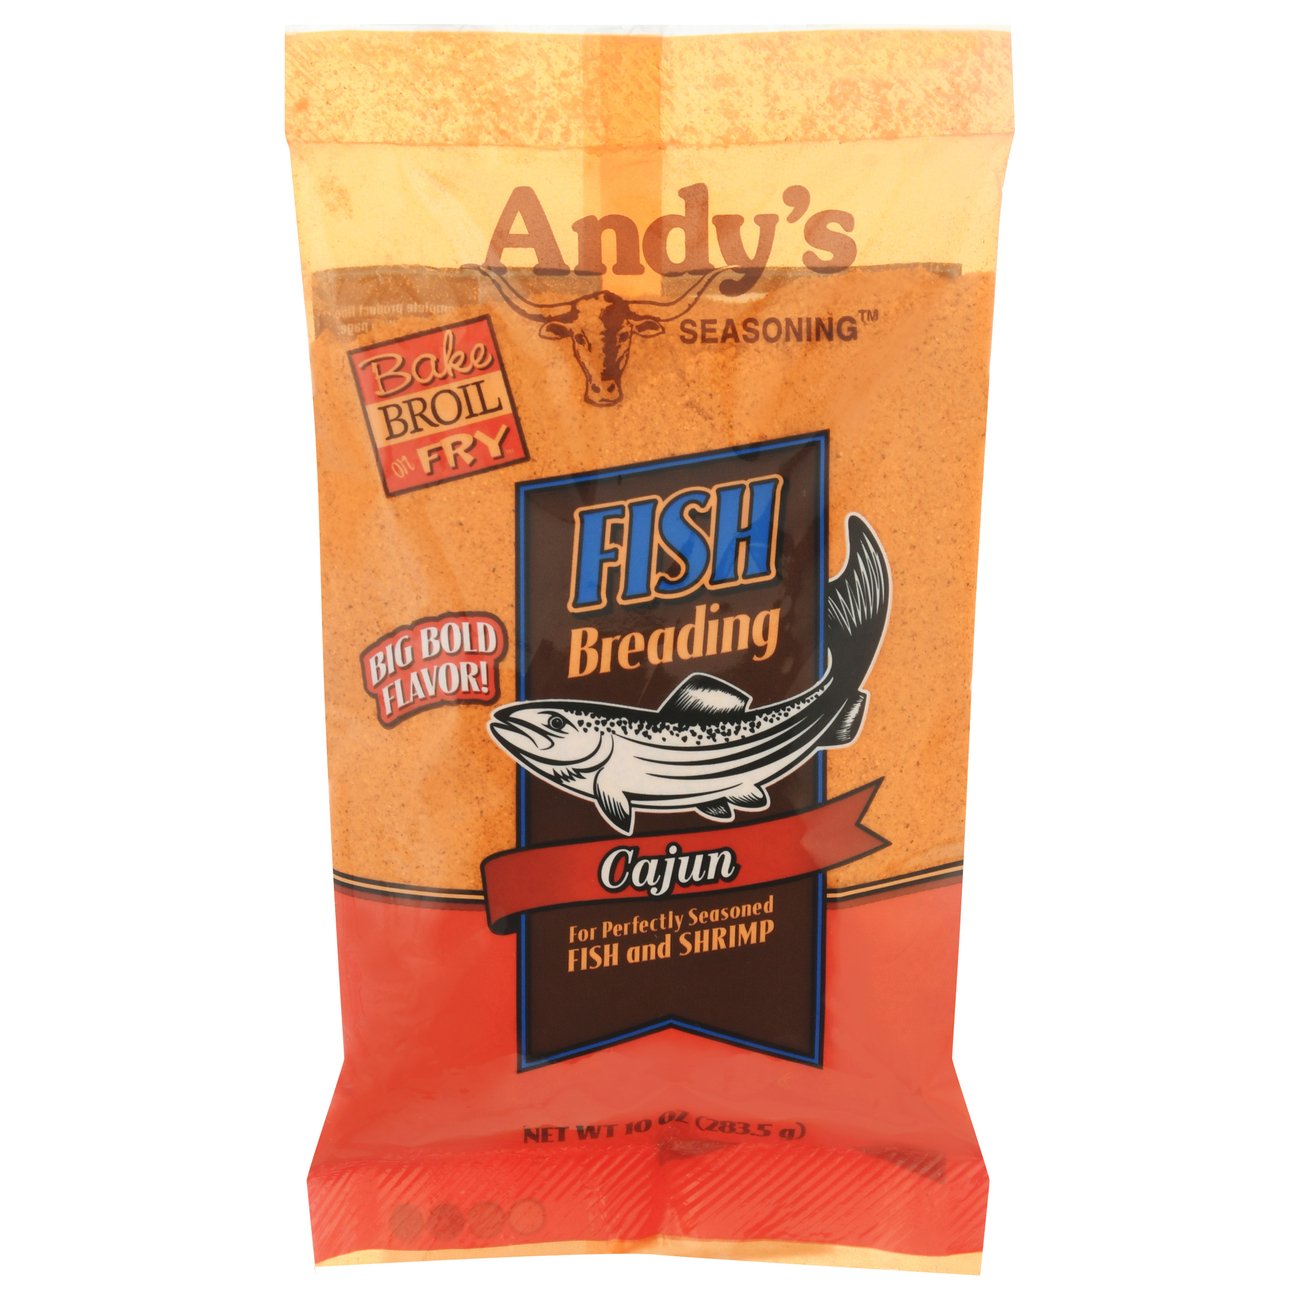 Andy's Seasoning Cajun Fish Breading Shop Breading